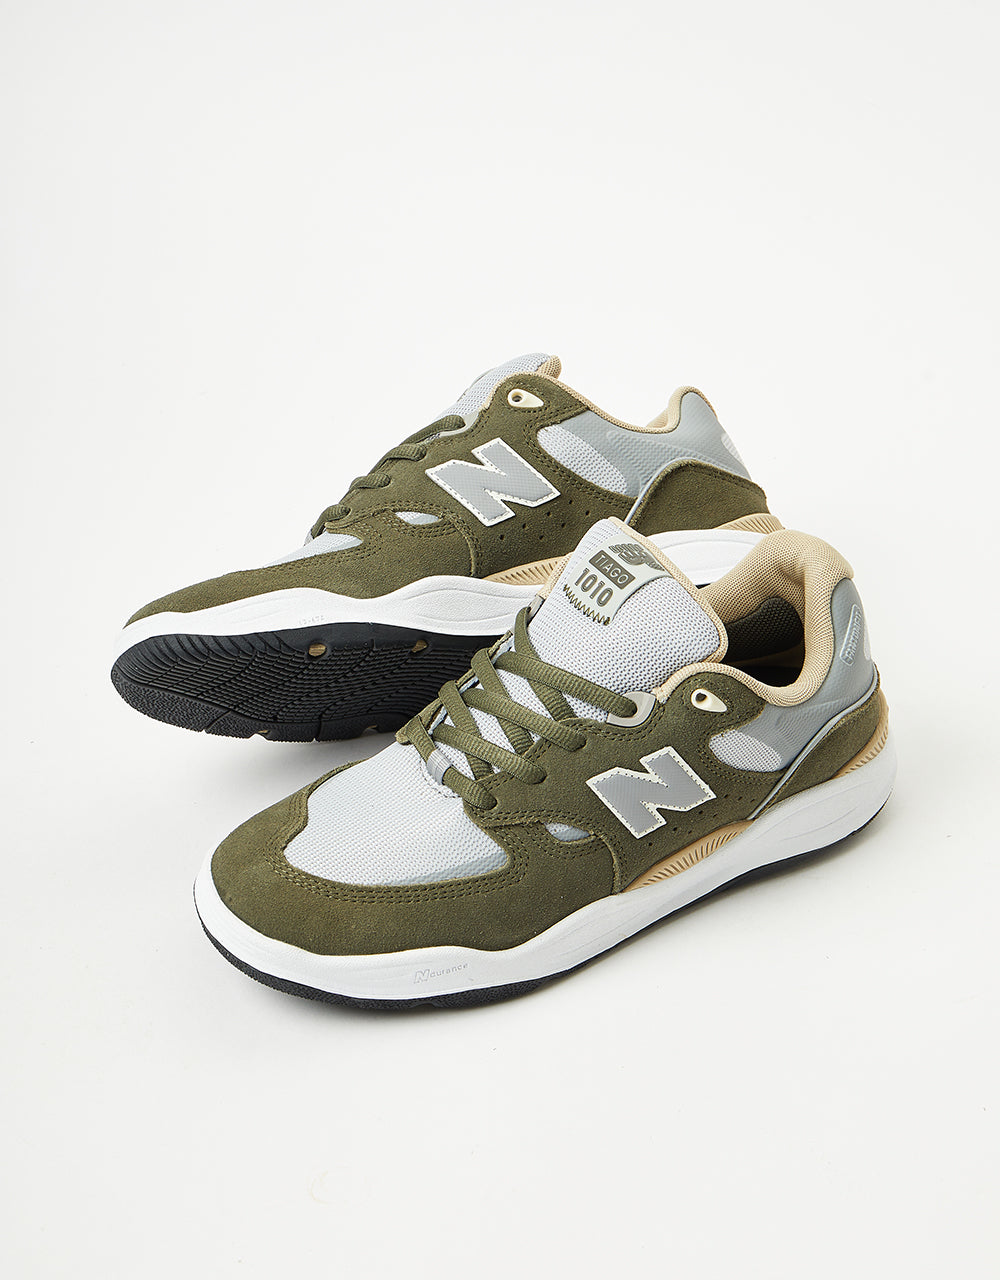 New Balance Numeric 1010 Skate Shoes - Olive/Grey